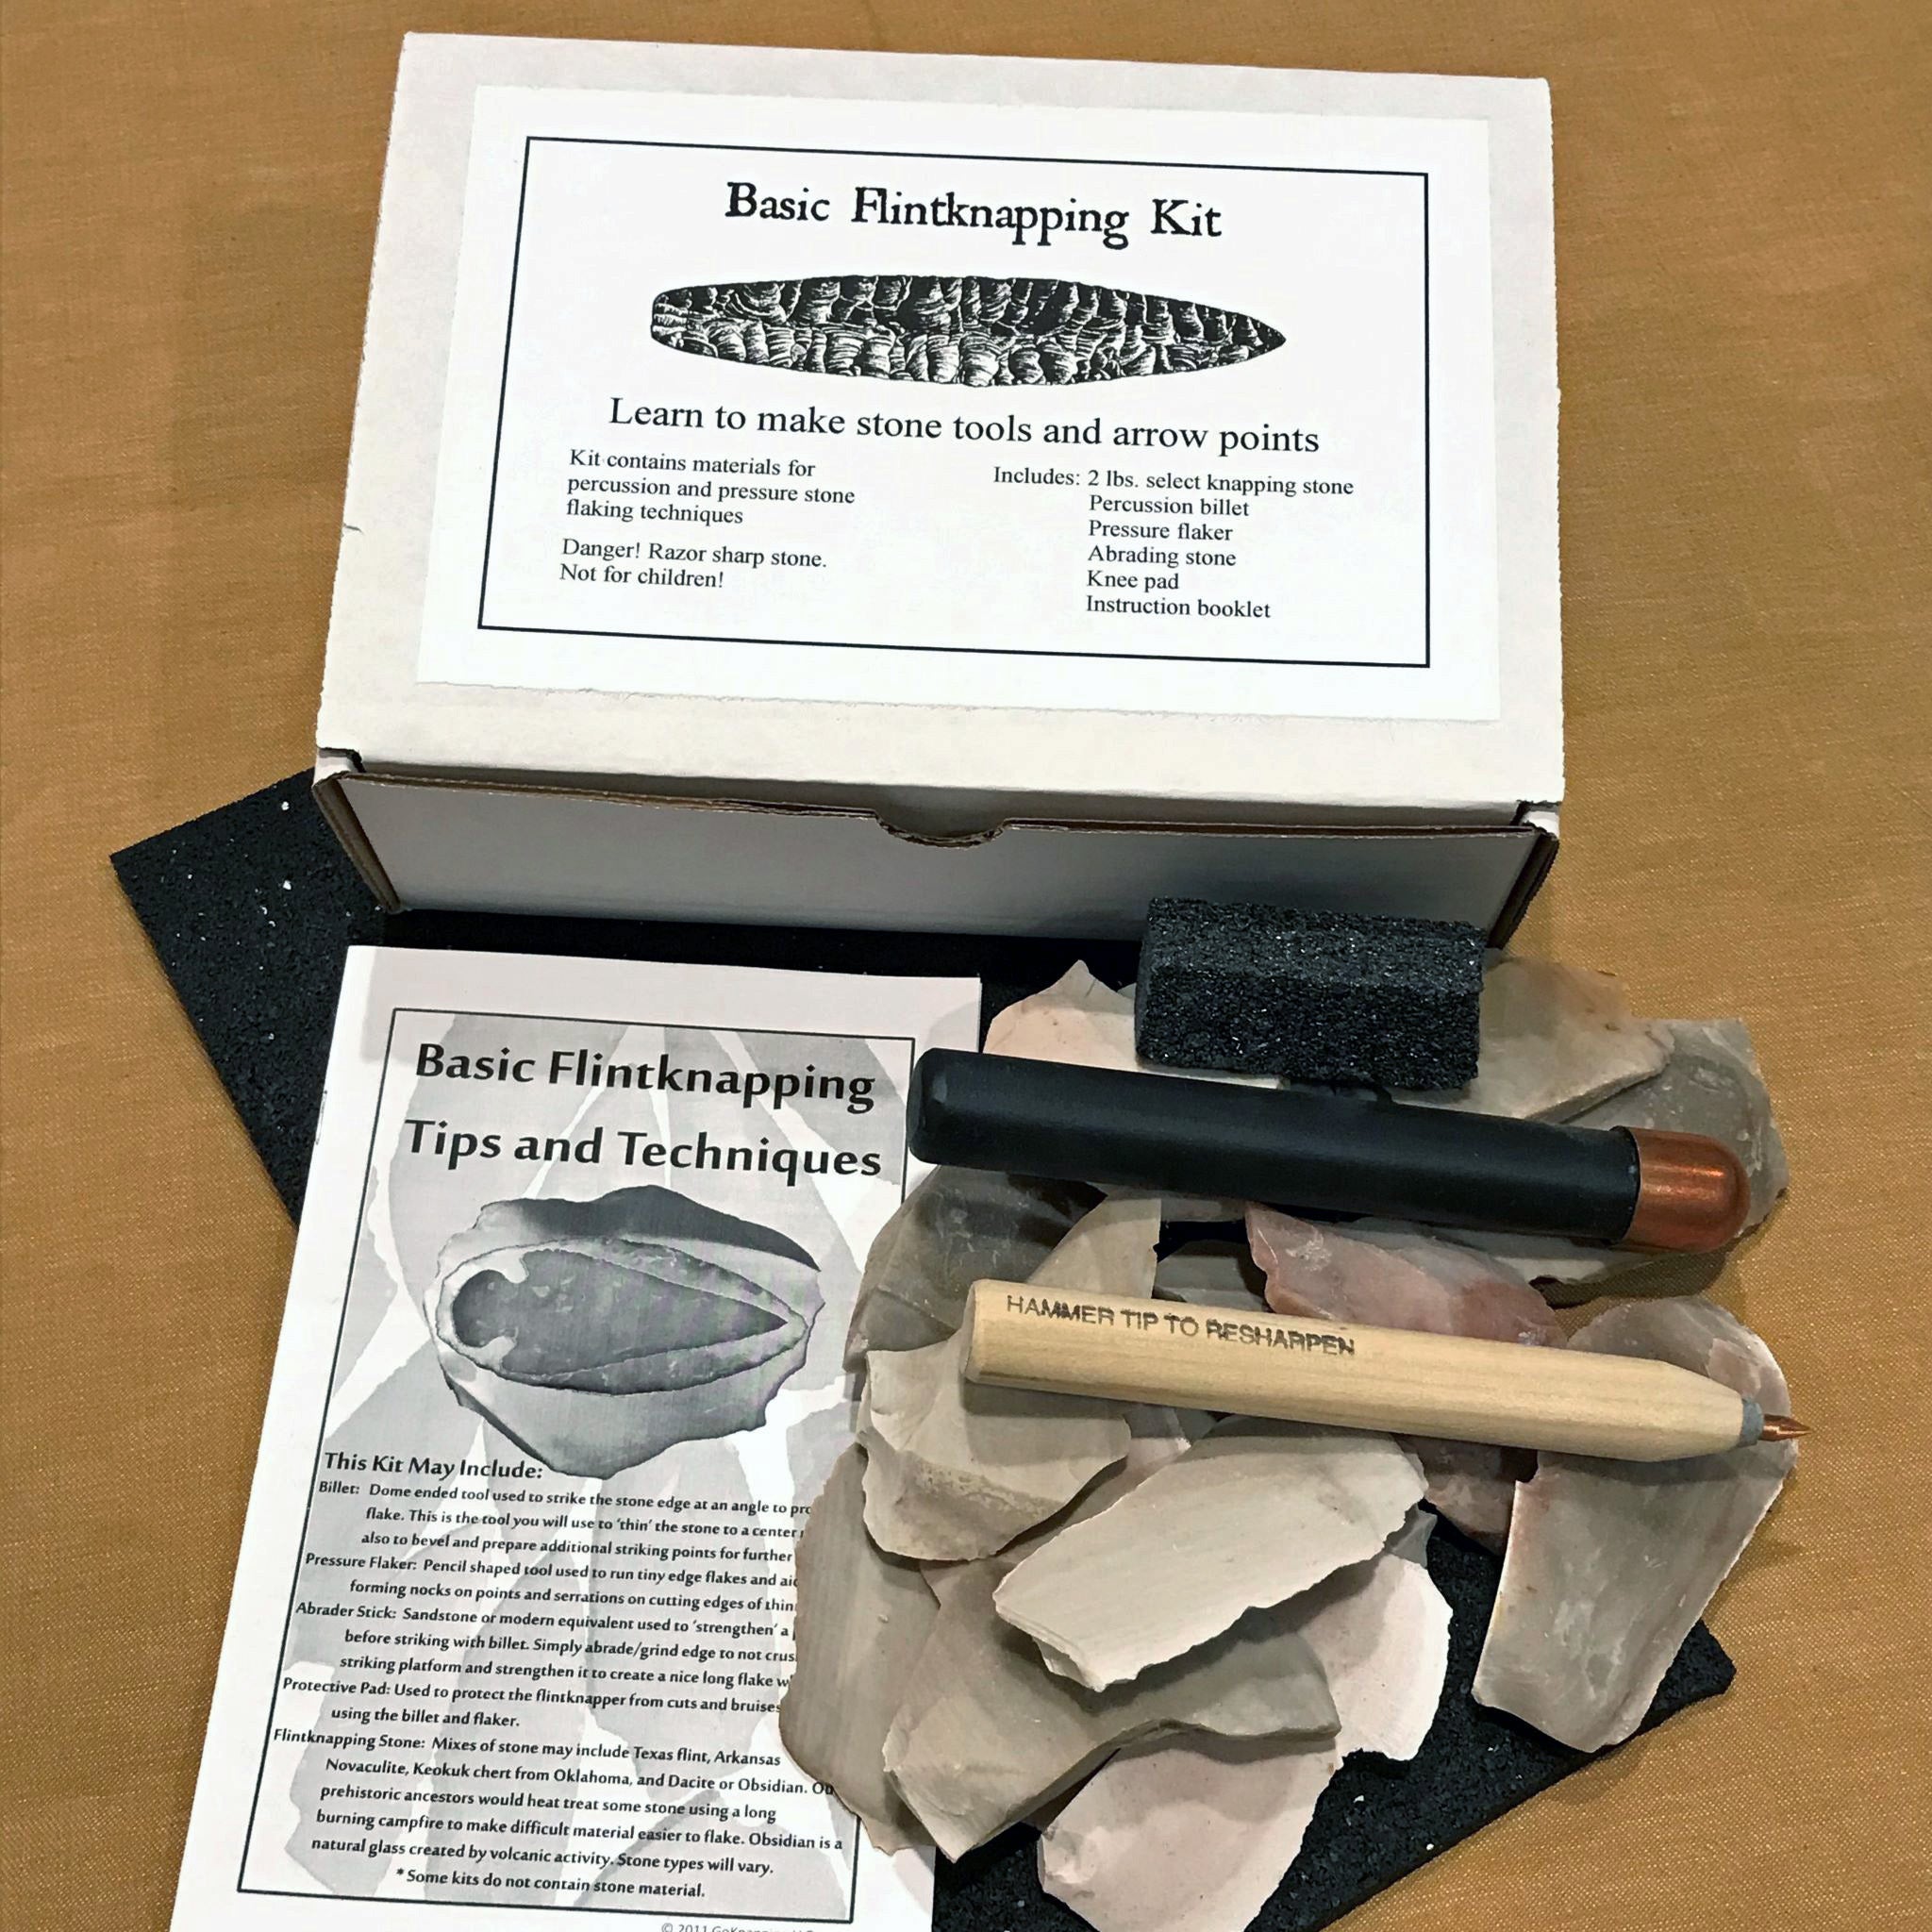 How to Make a Steel Nail Pressure Flaker for Flintknapping - Beginner Tool  Kit 